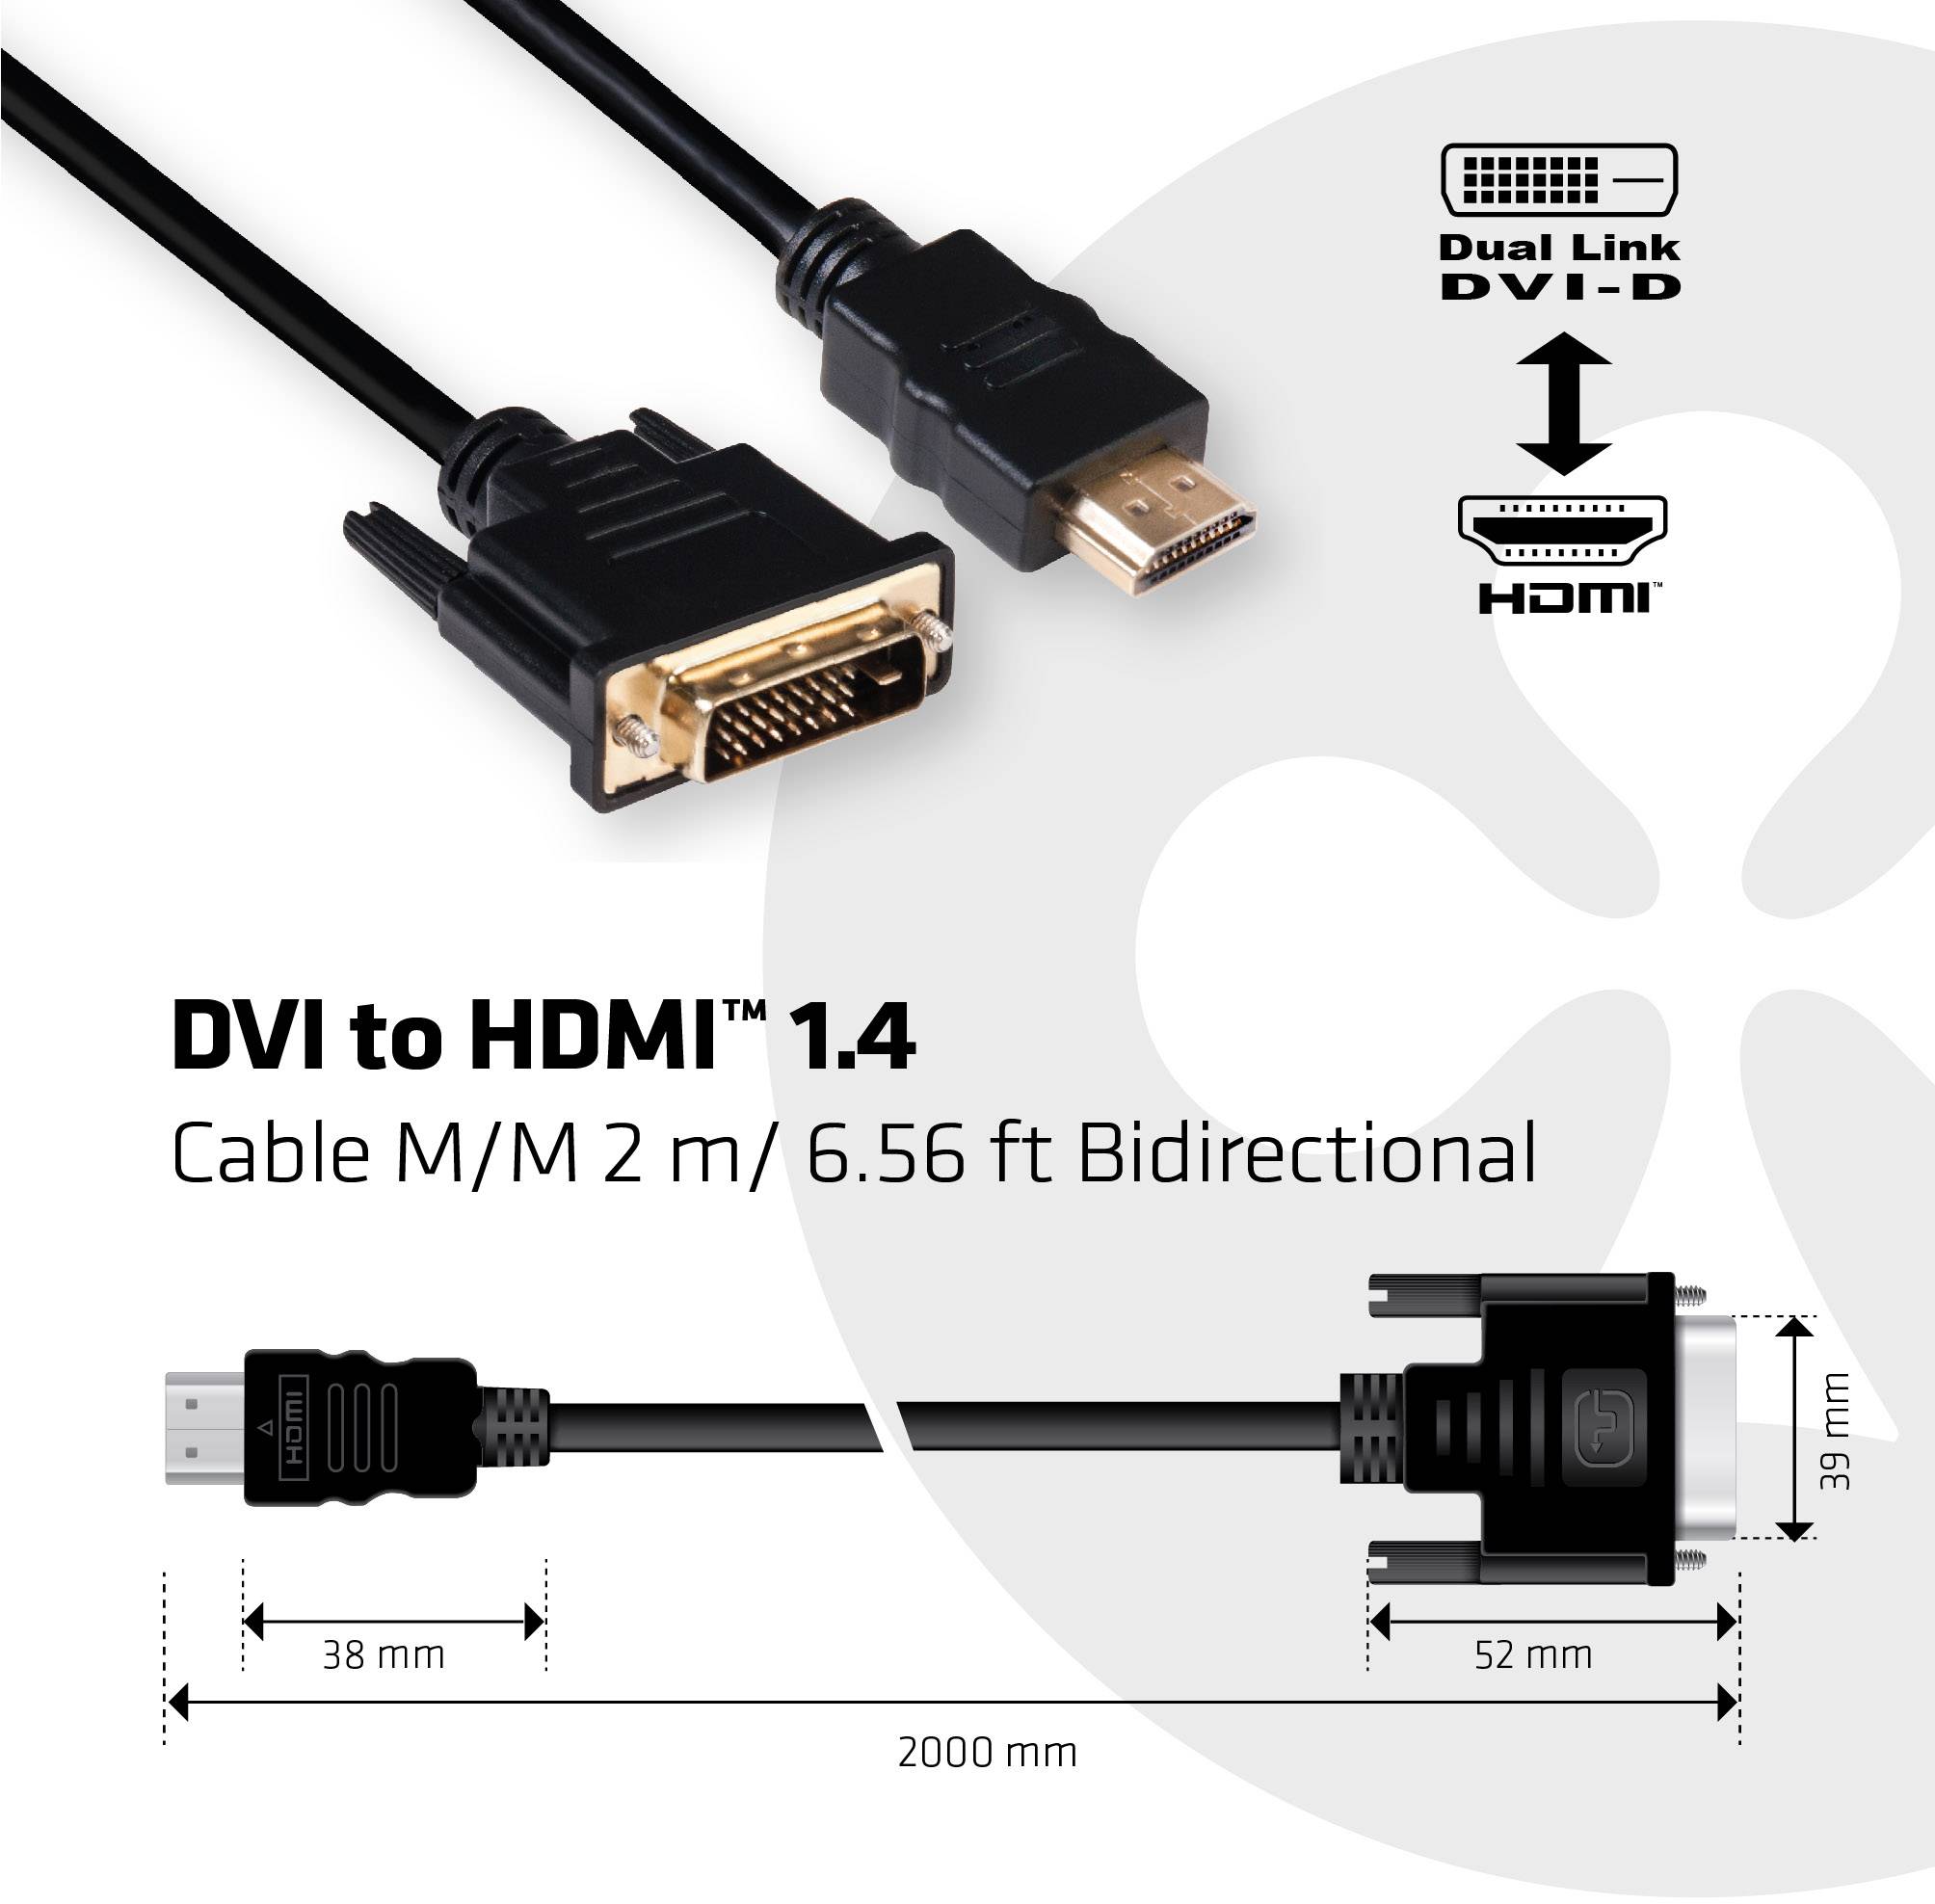 CLUB3D HDMI Adapterkabel 2m HDMI zu DVI-D bidirektional schwarz